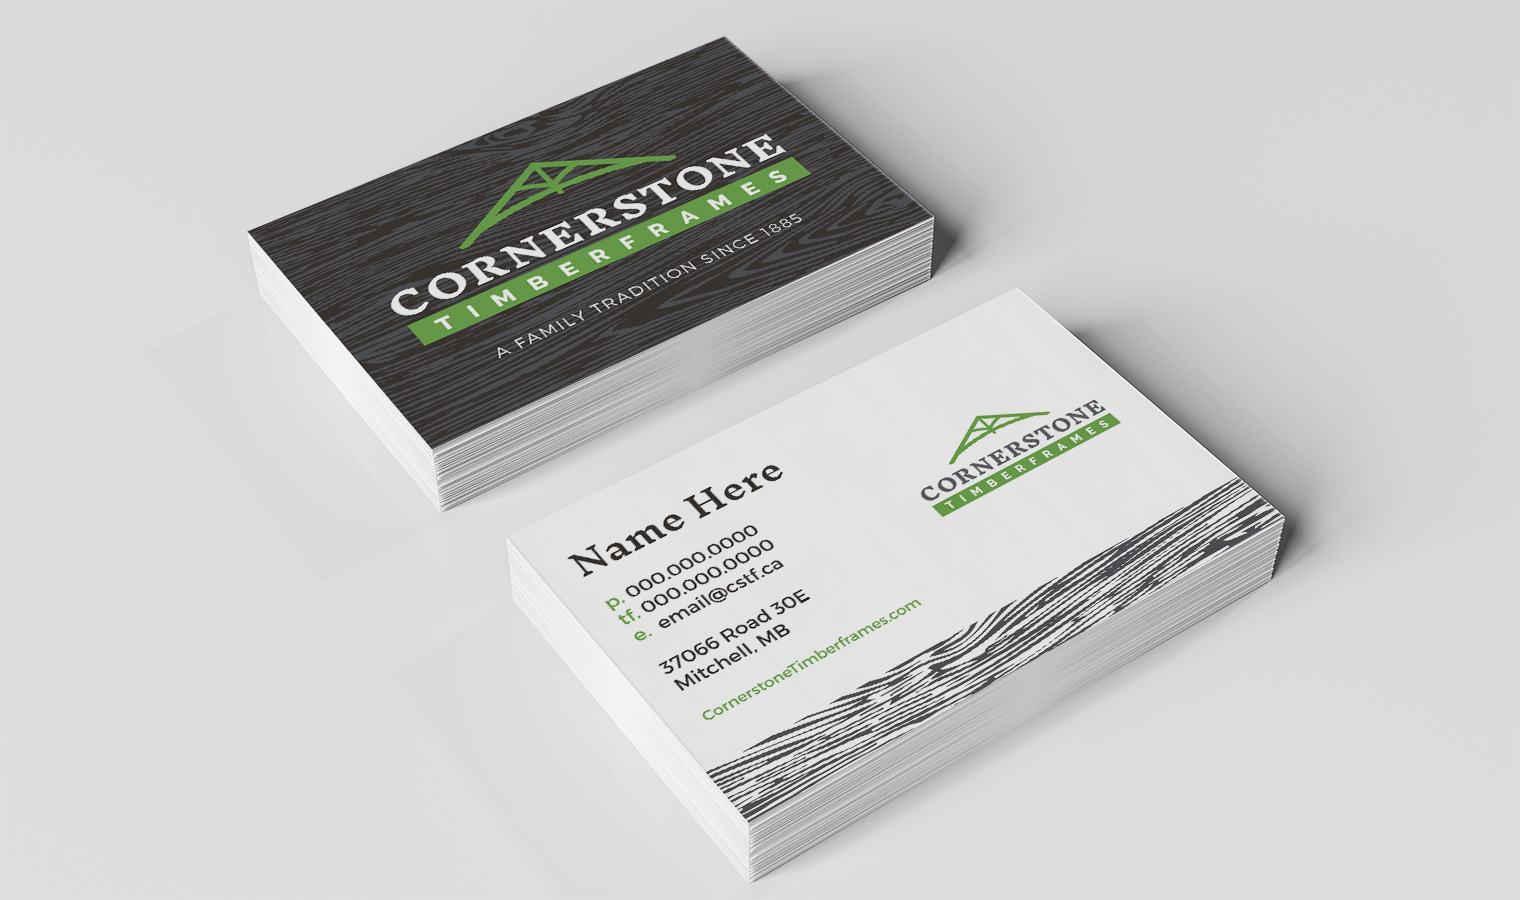 Cornertsone Timberframes Business Cards